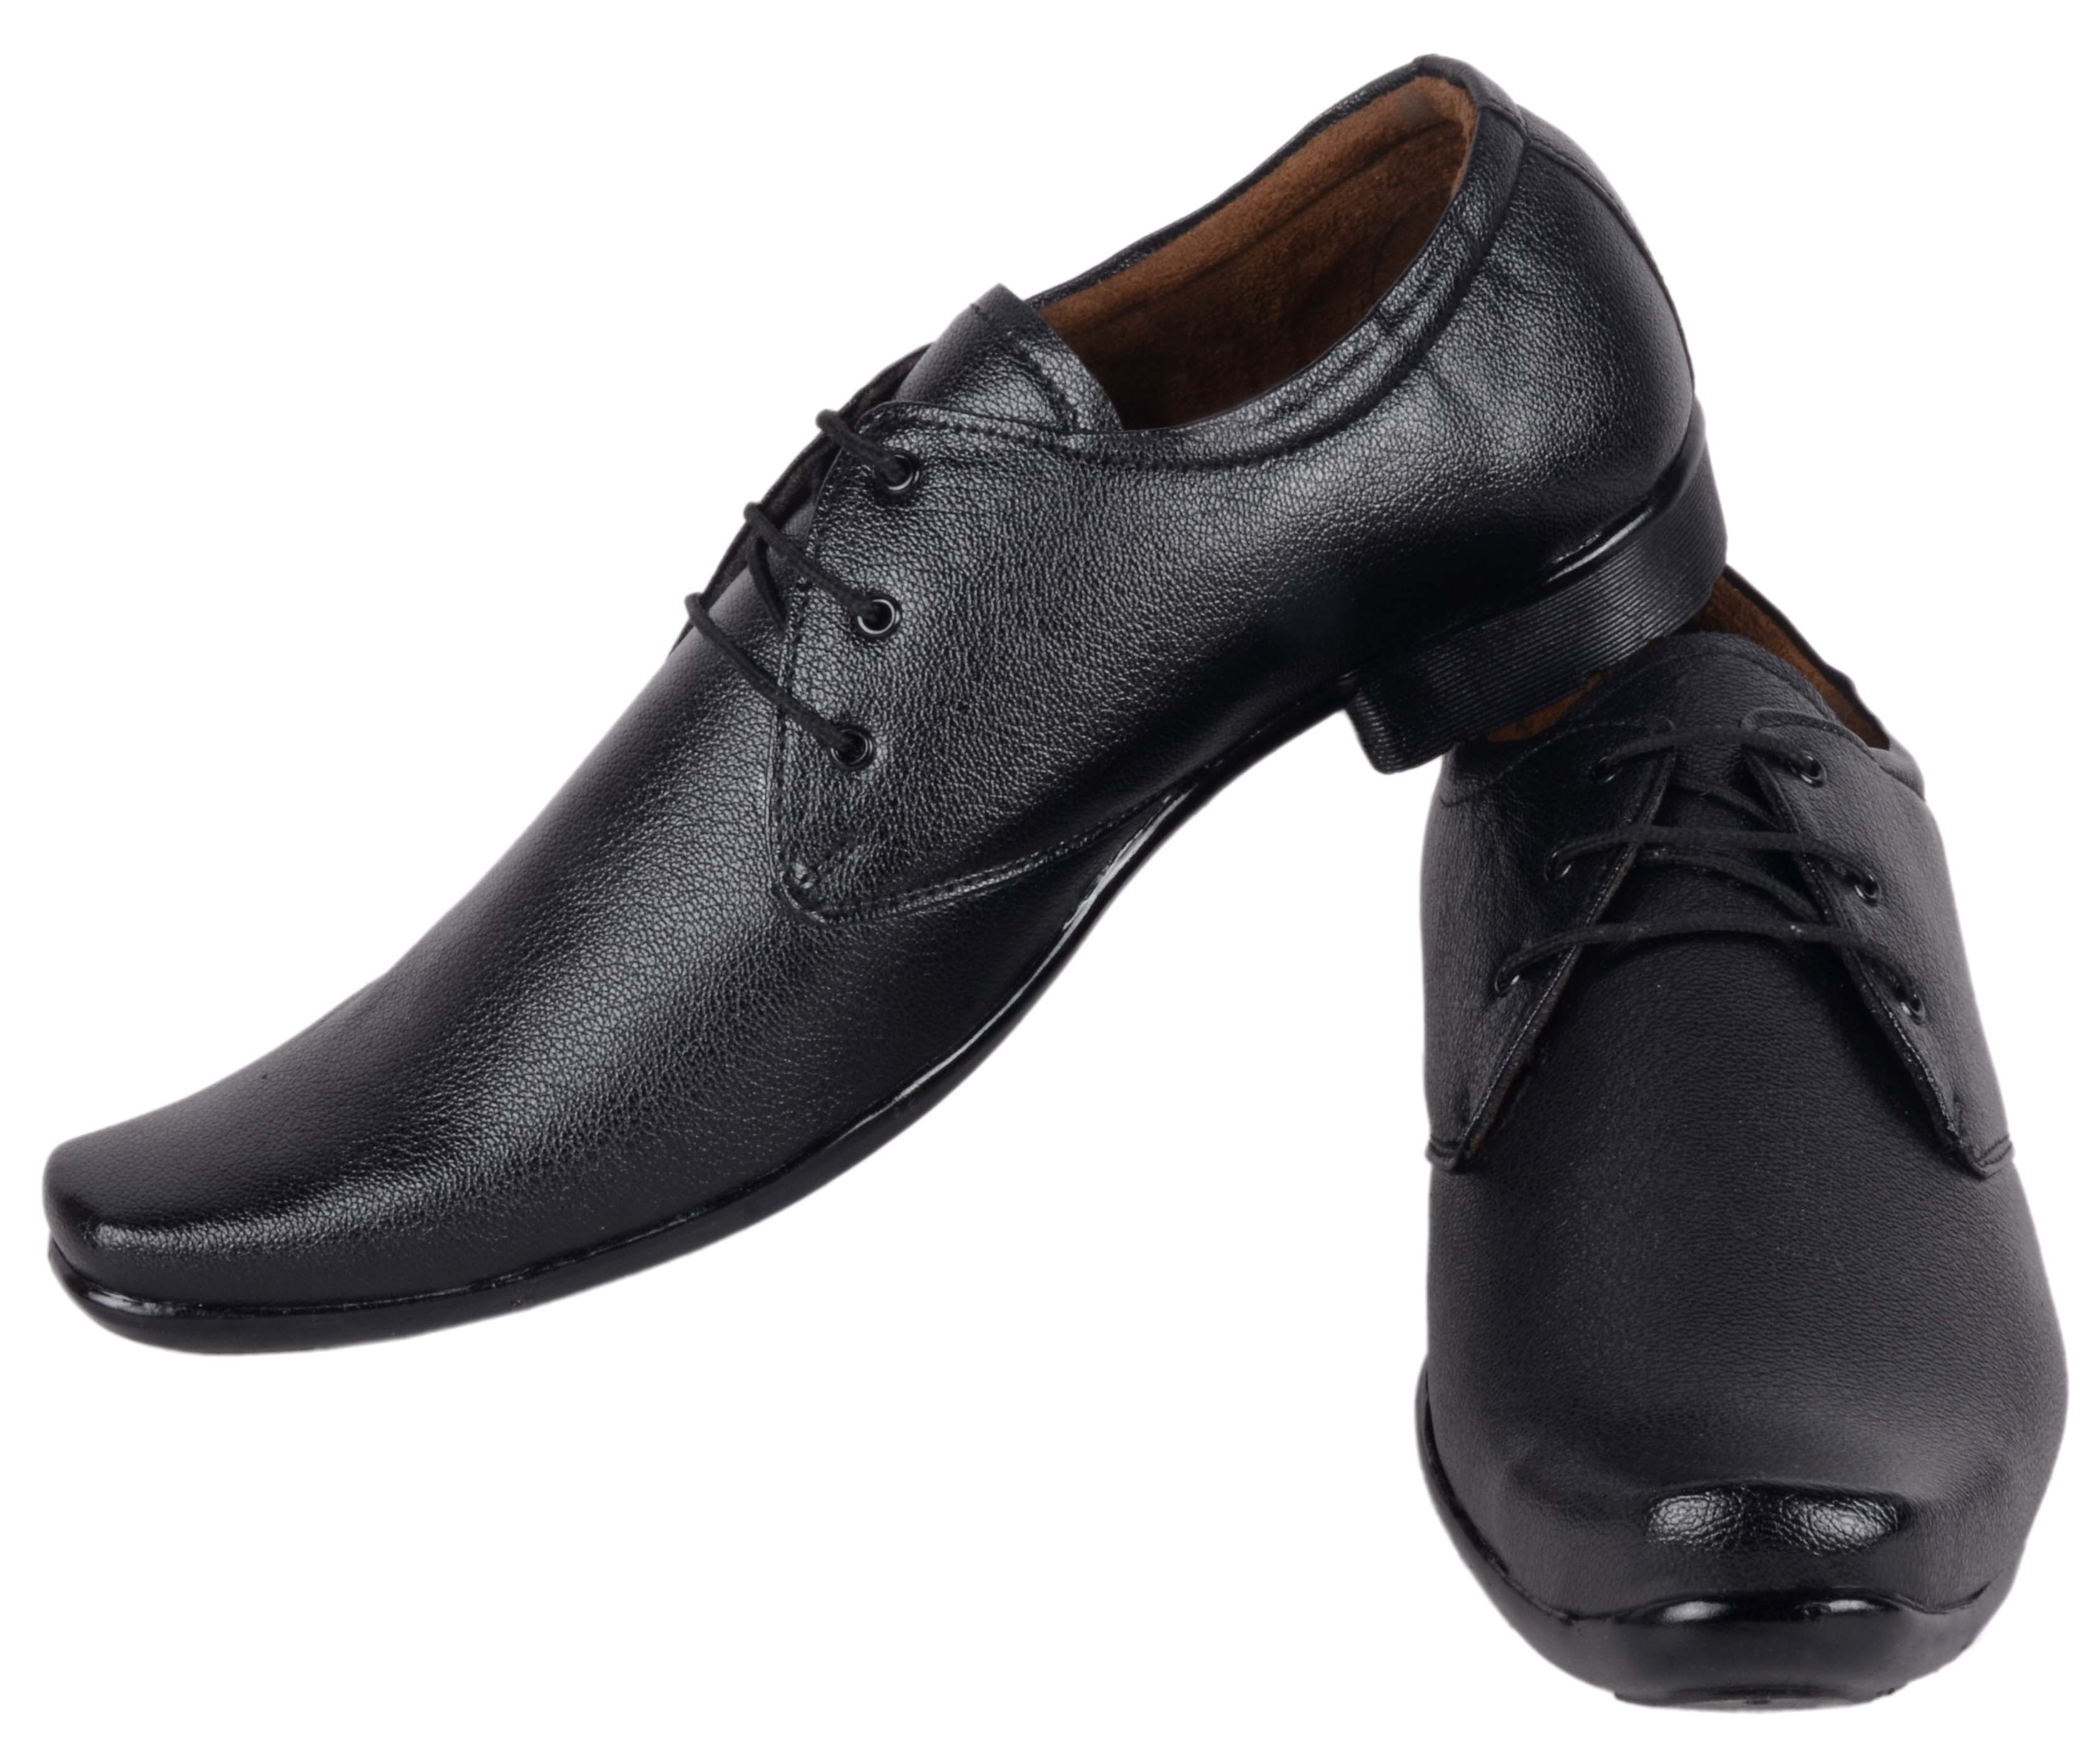 Buy Austrich Men's Black Formal Derby Shoes Online @ ₹599 from ShopClues